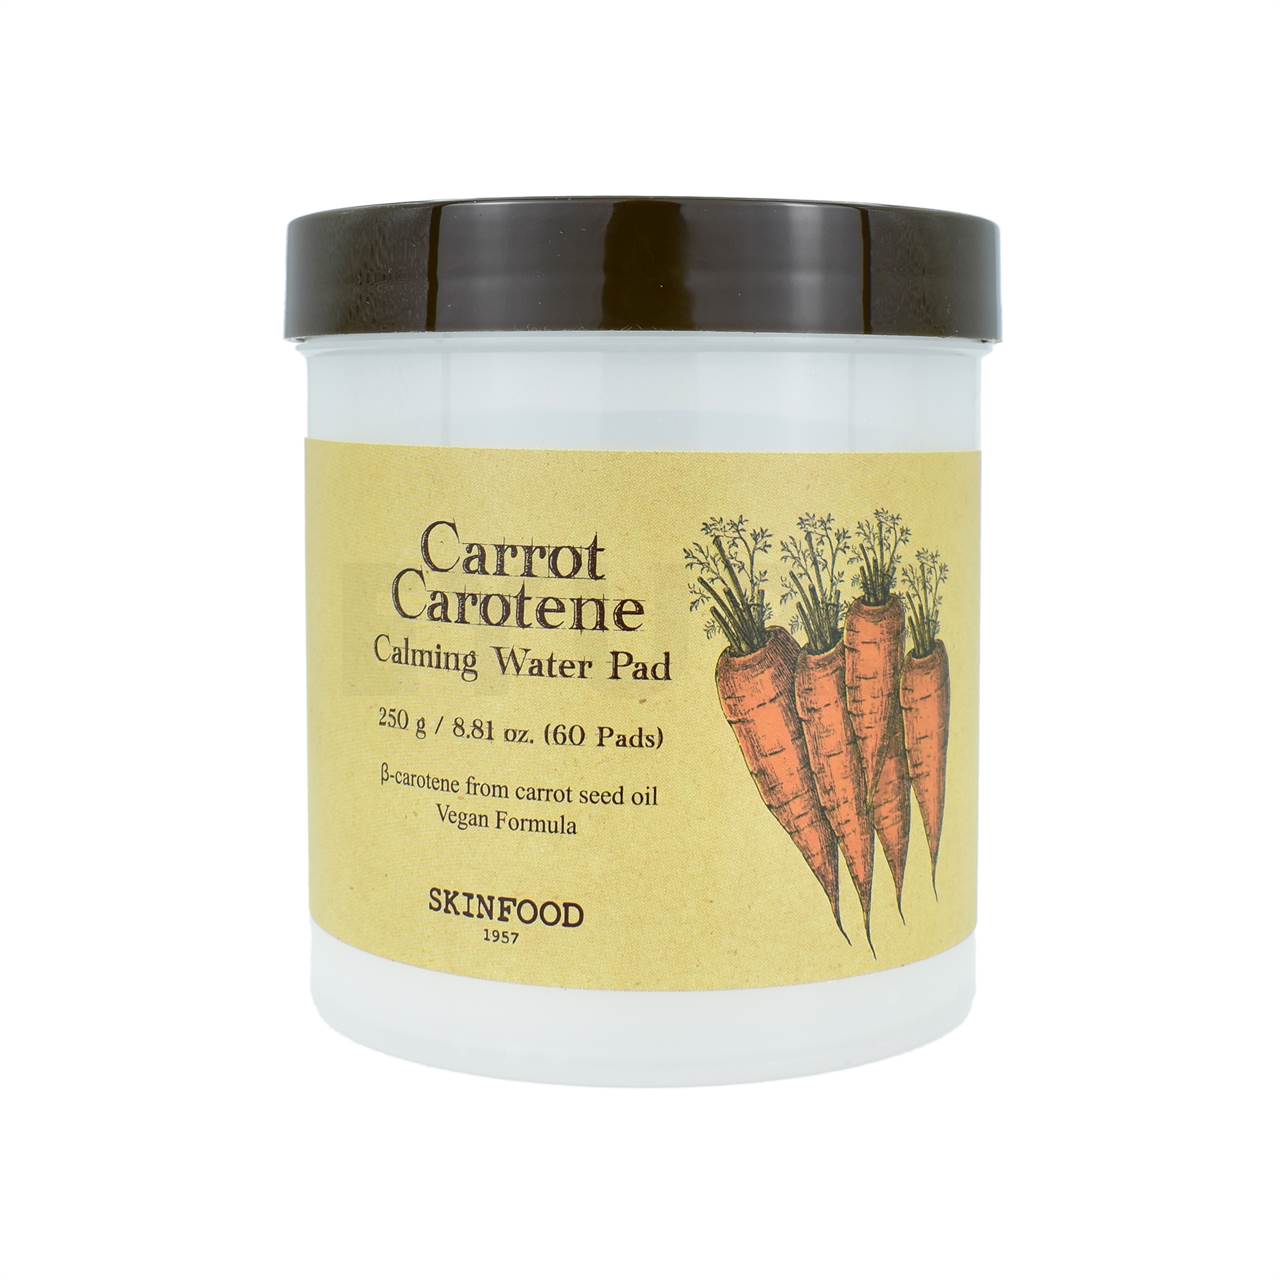 skinfood carrot carotene calming water pad